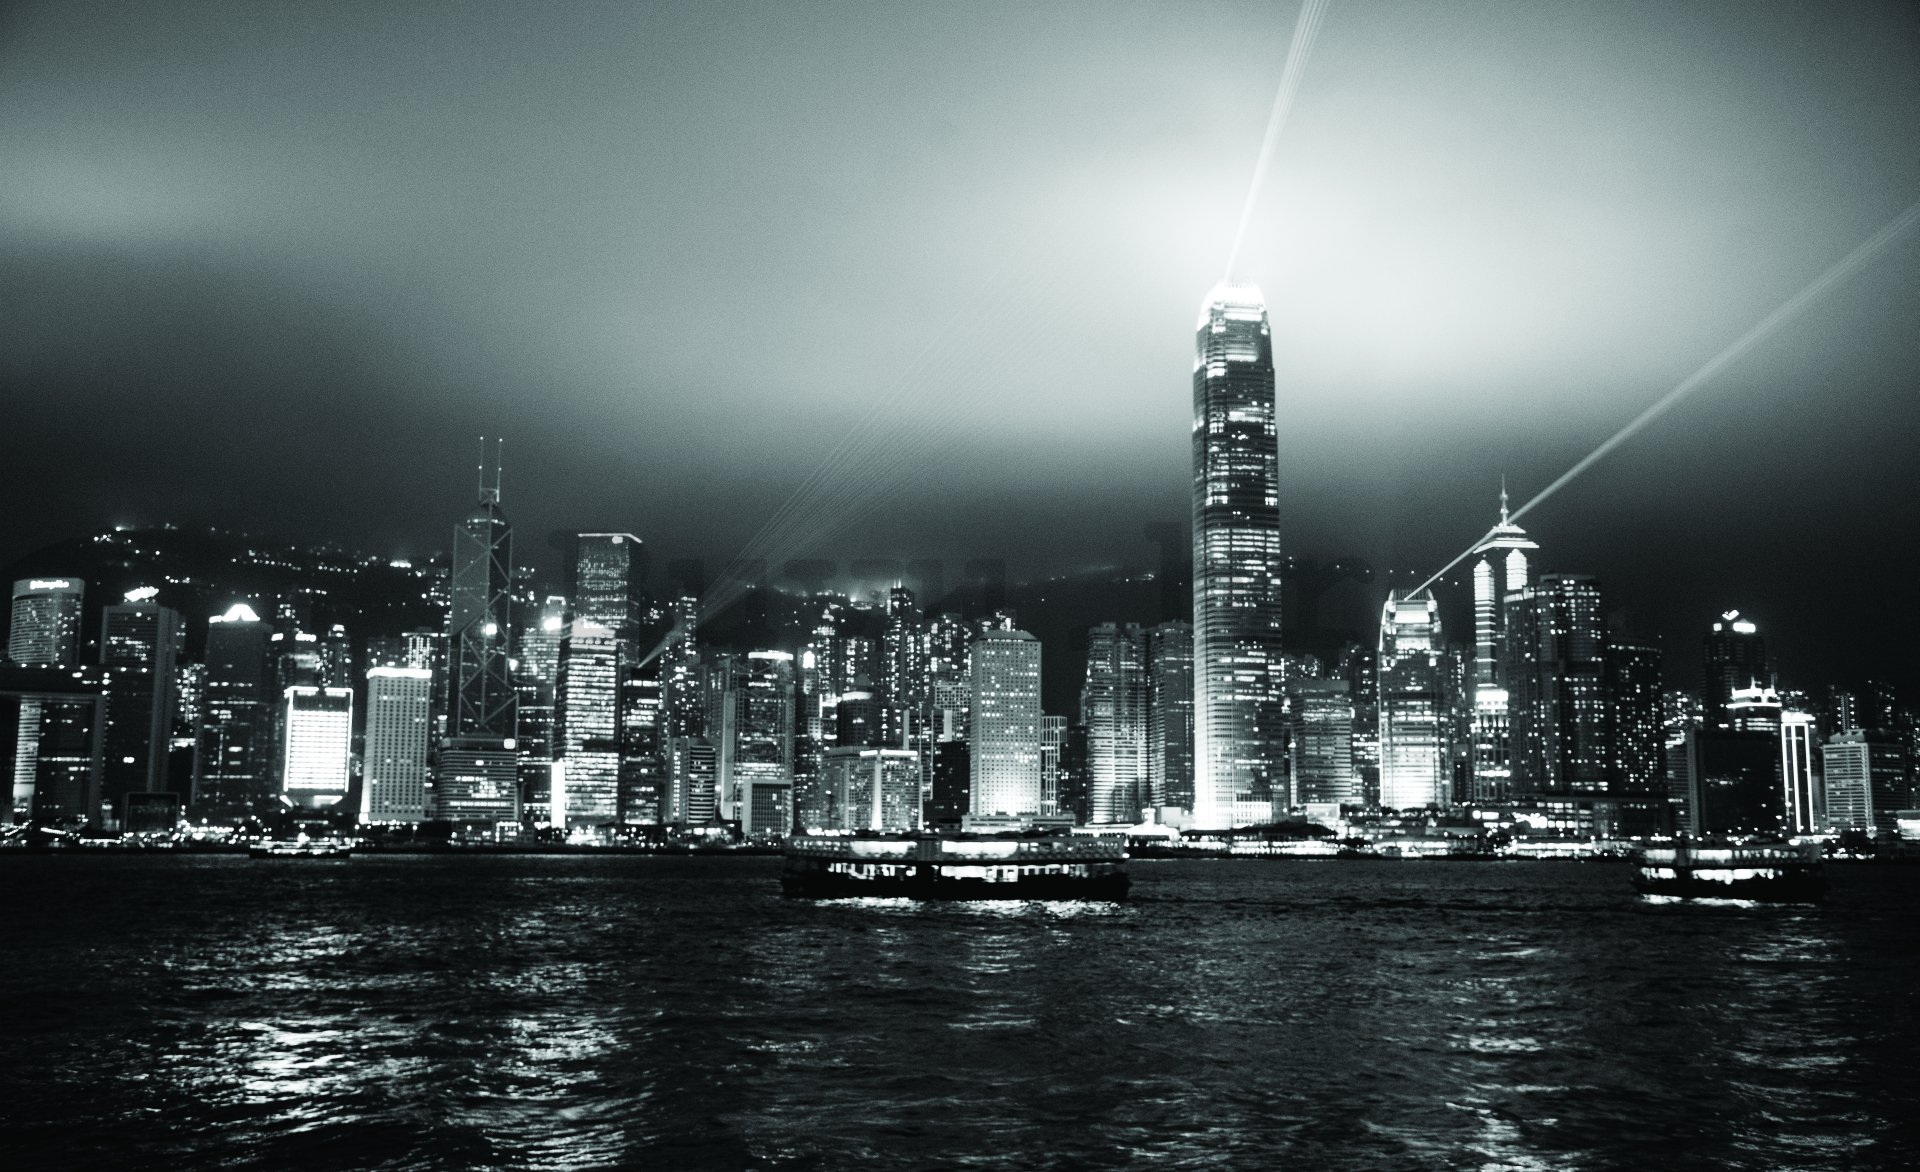 Foto tapeta Vlies: Hong Kong (crno-bijelo) - 312x219cm